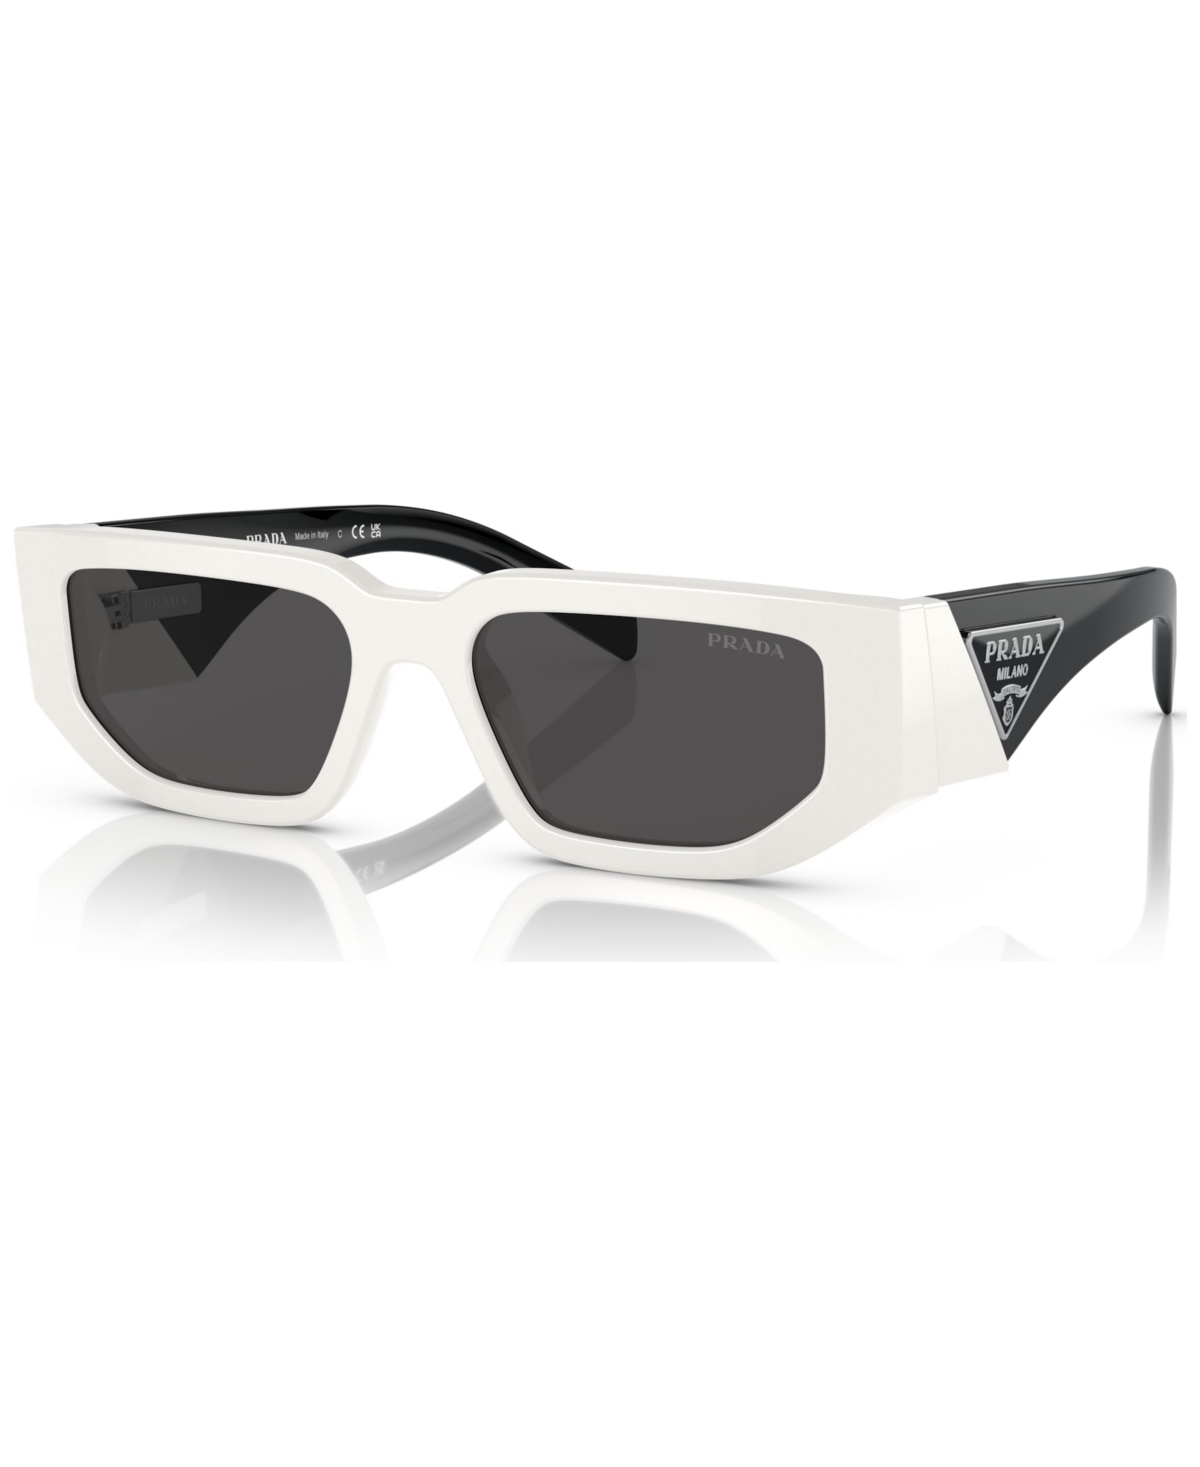 Prada Men's Sunglasses, Pr 09zs In Talc